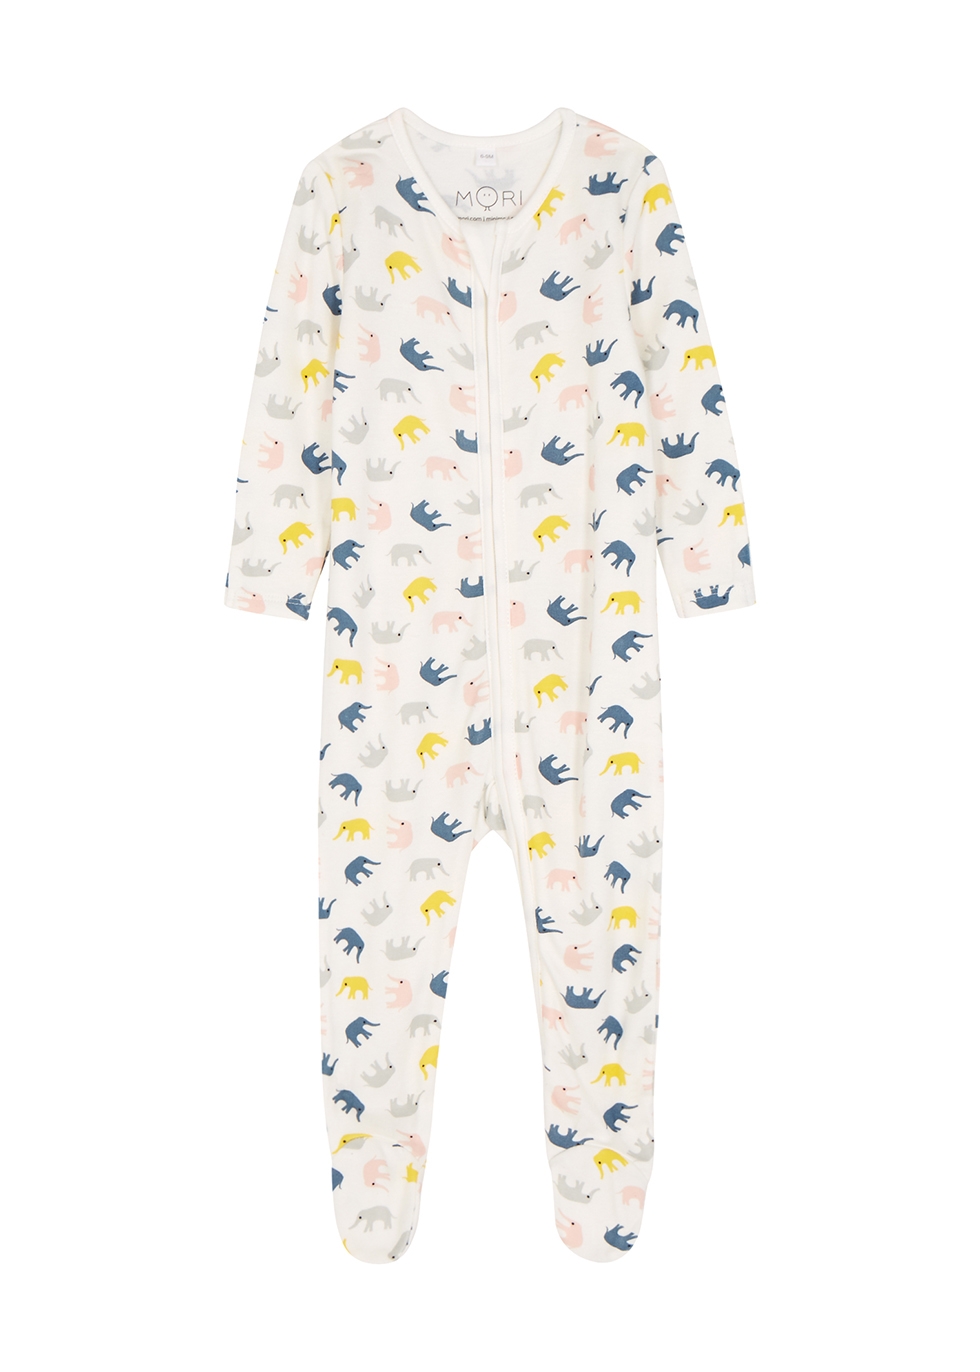 Elephant-print jersey sleepsuit Harvey Nichols Baby Clothing Loungewear Sleepsuits 